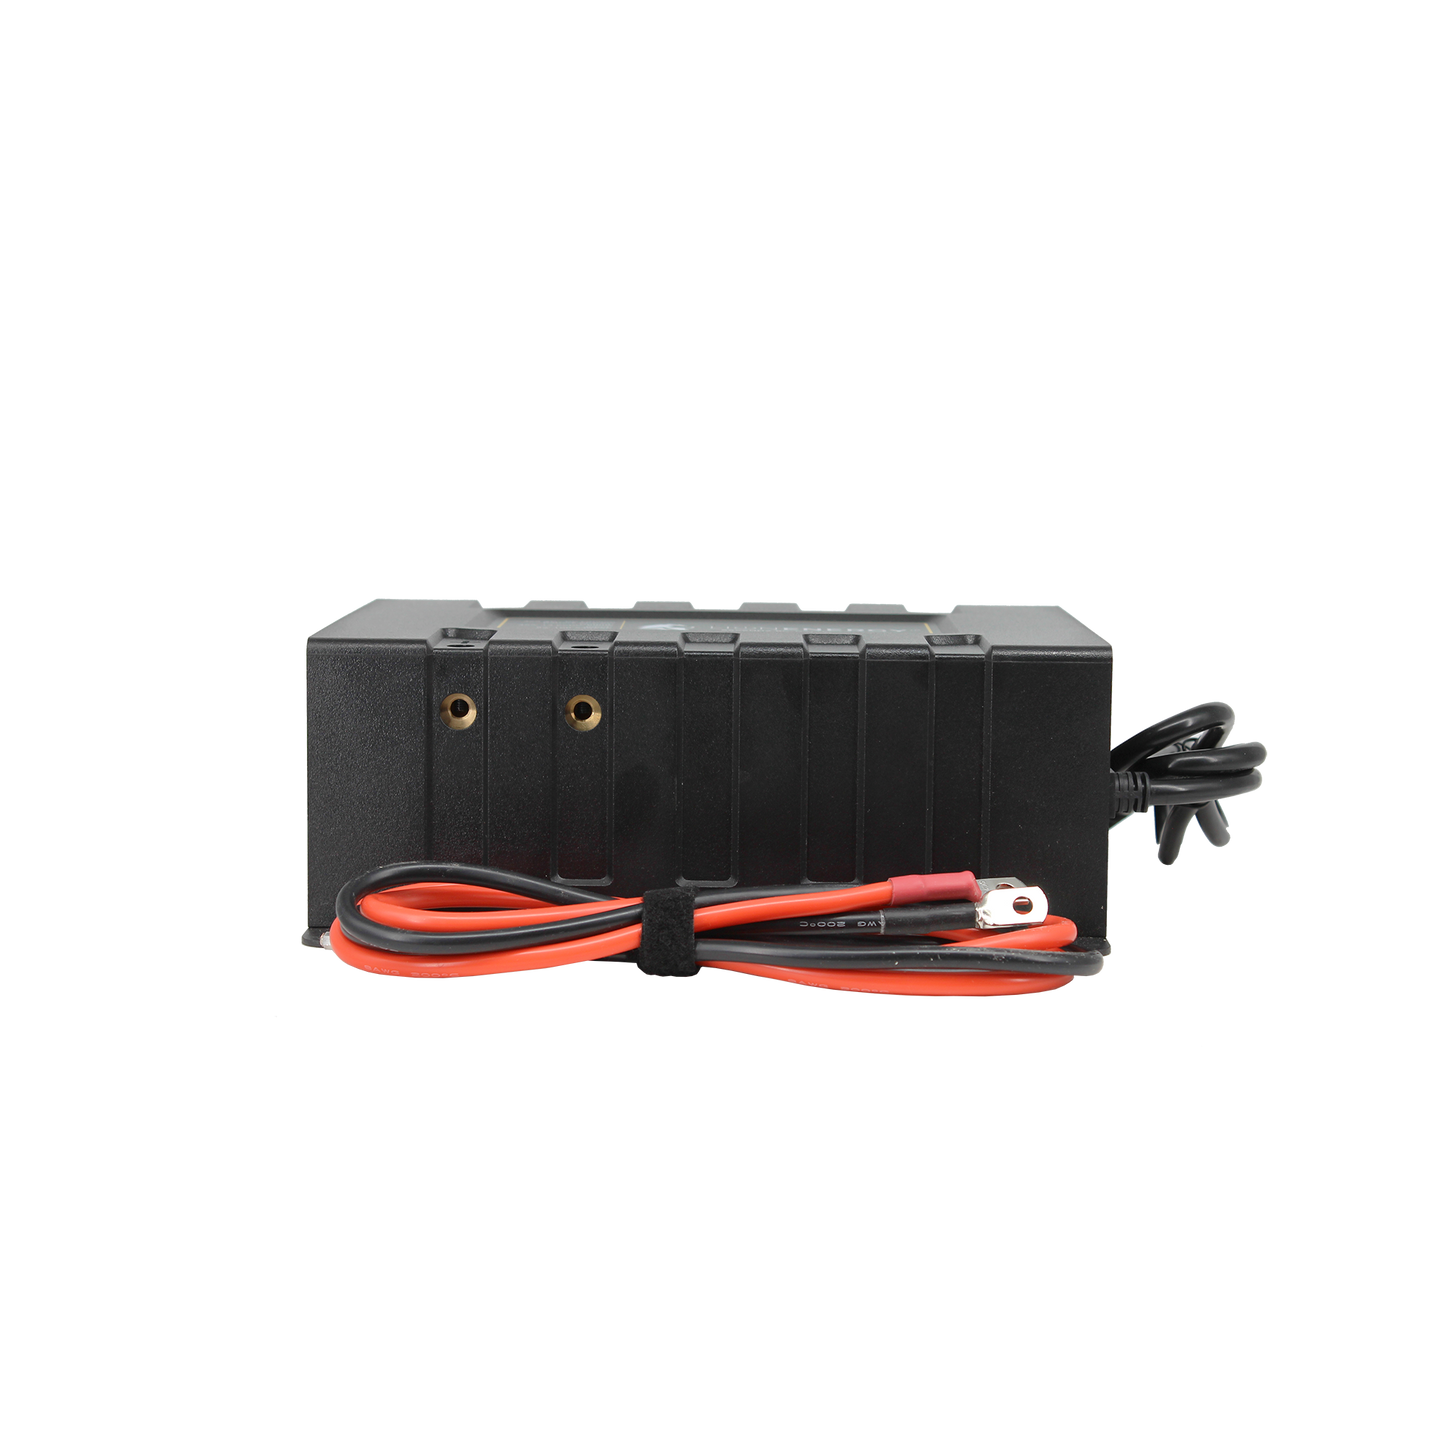 Savanna BC 45 Battery Charger, Output 45A @ 14.6V, Input 100VAC to 240 VAC